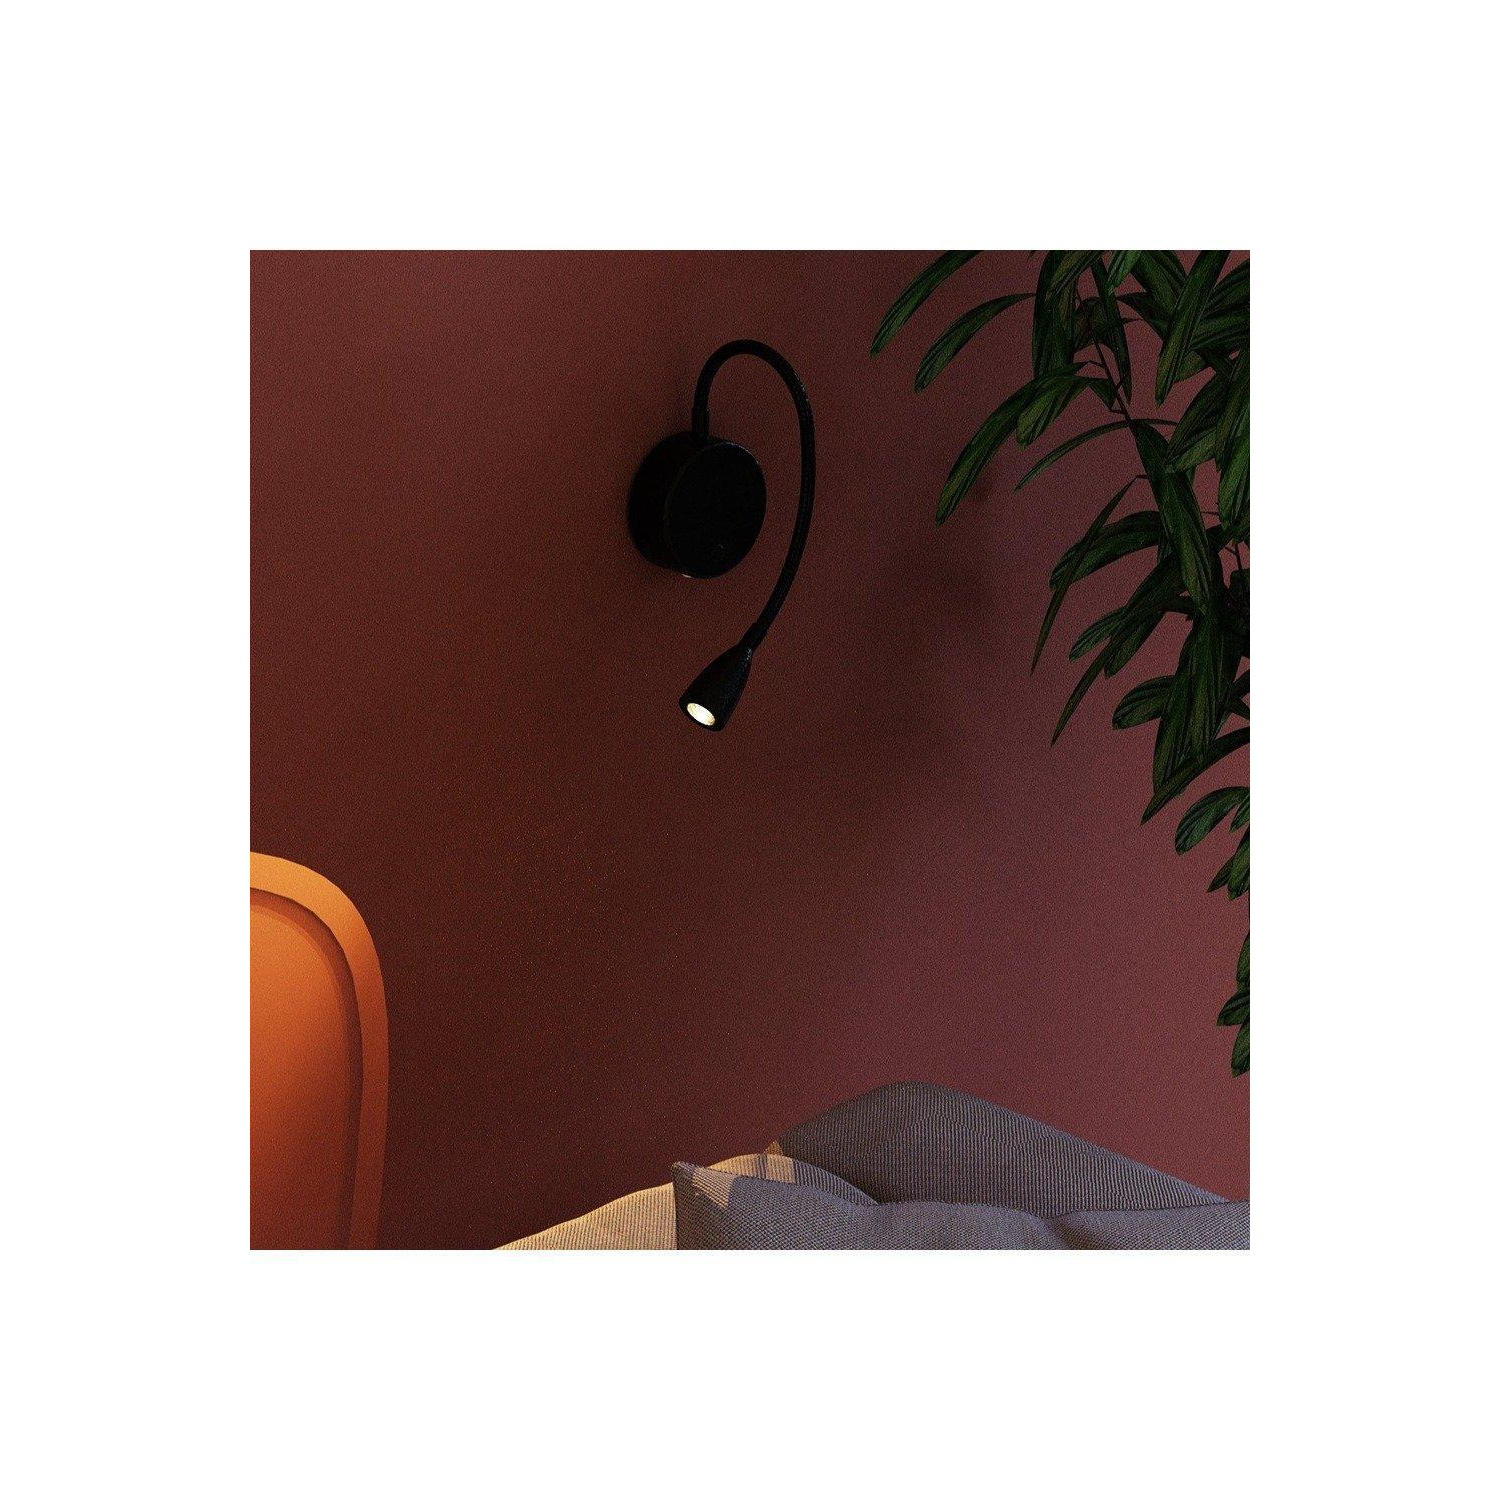 CGC Lighting 'Matilda' Black Adjustable Flexible Neck LED Rechargeable Magnetic USB Reading Bedside Wall Light - image 1